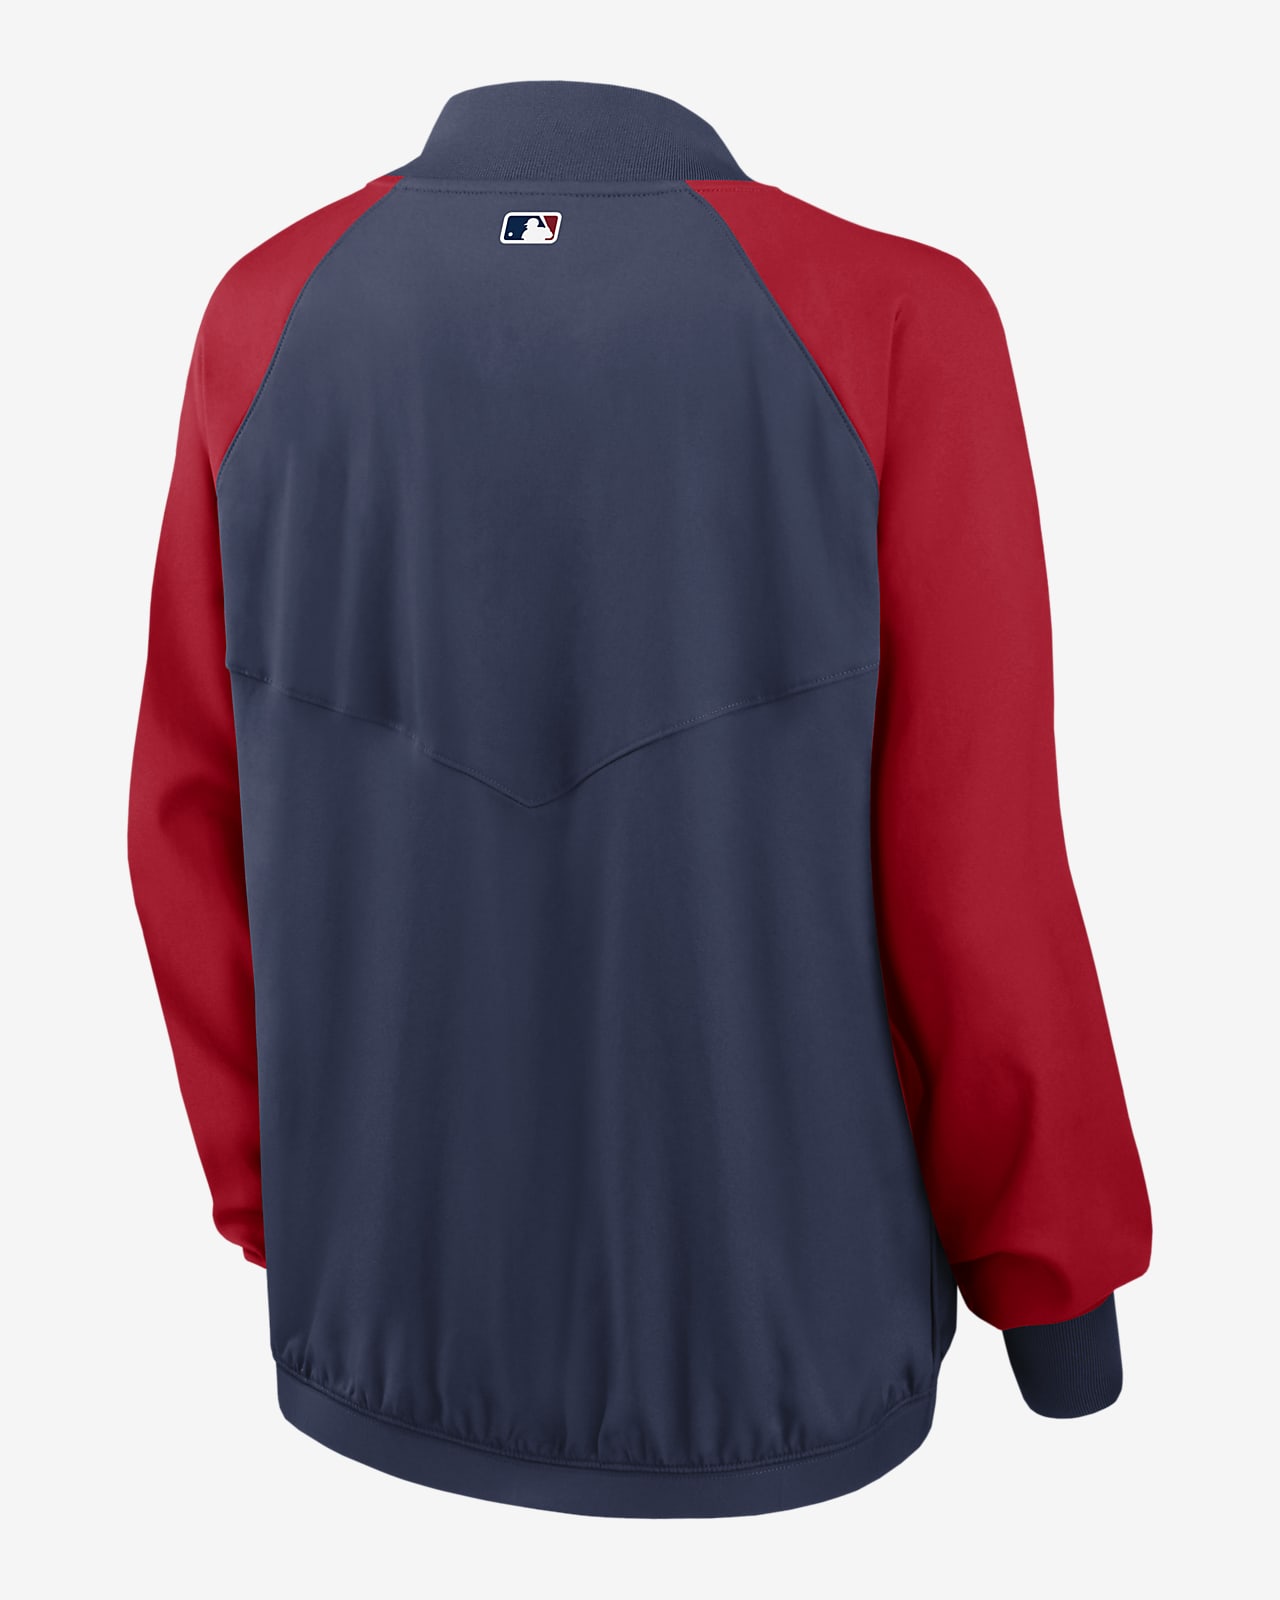 Nike Dri-FIT Team (MLB Atlanta Braves) Women's Full-Zip Jacket.